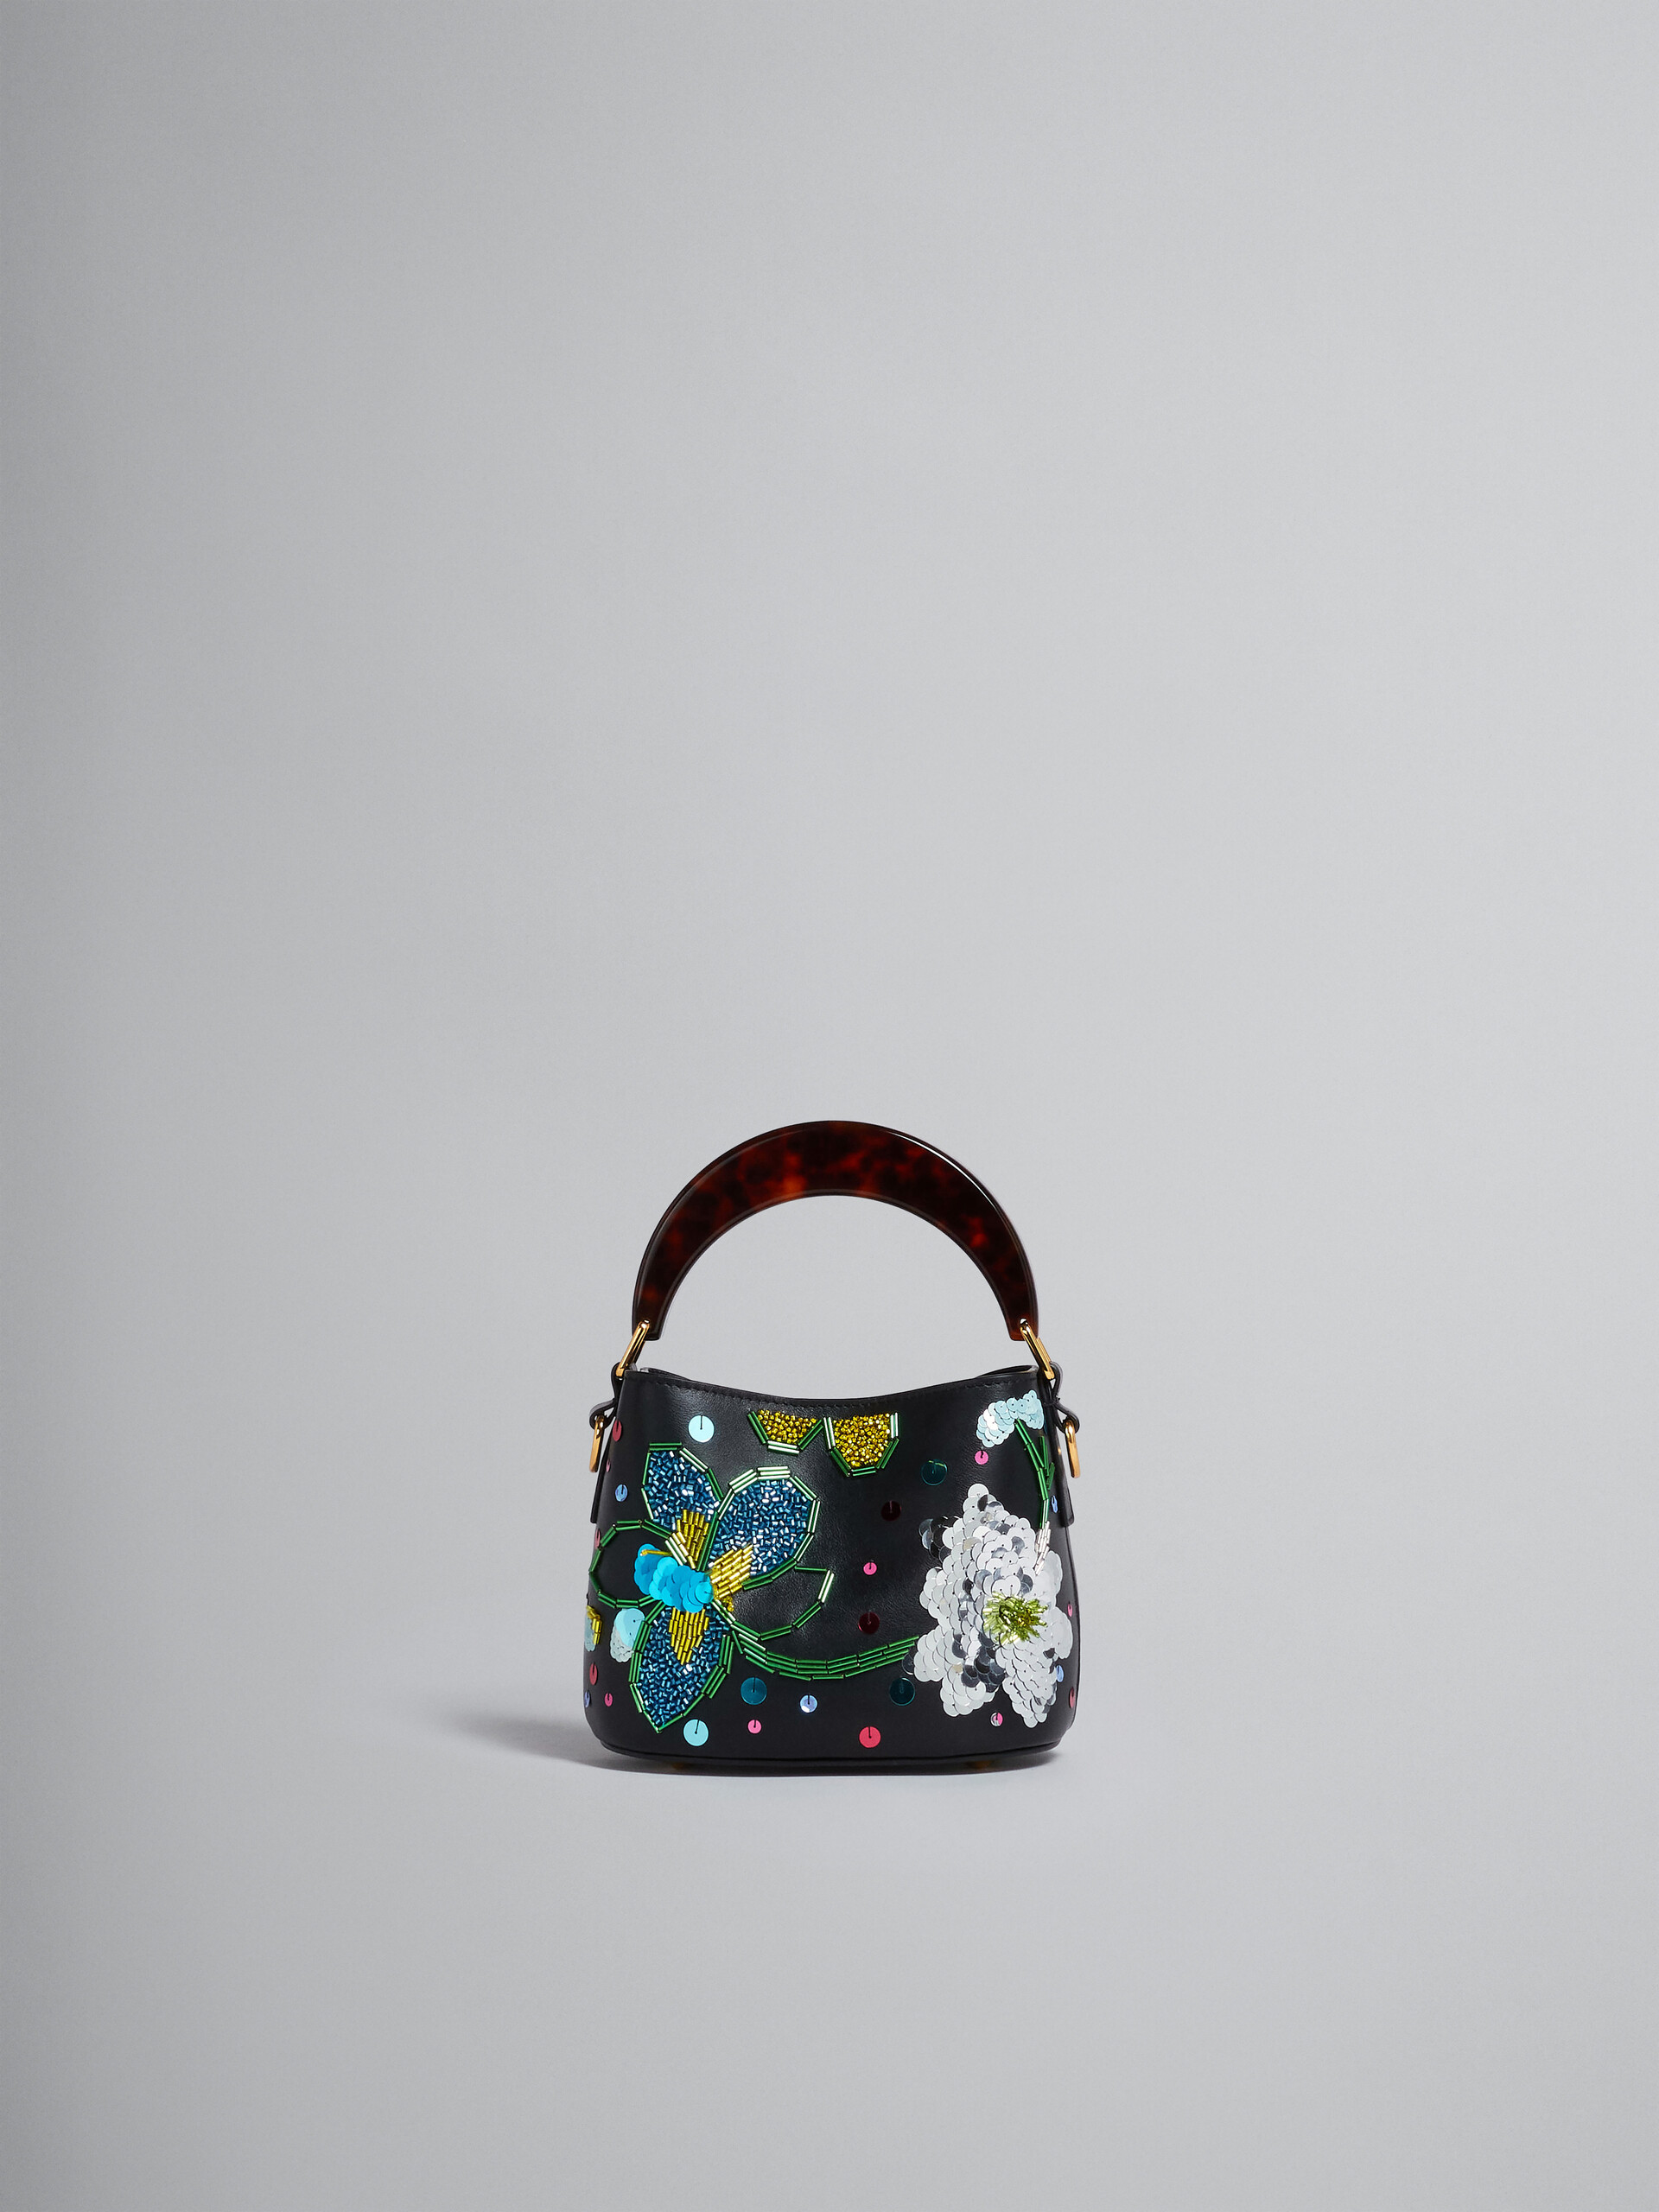 Venice Mini Bucket in embroidered black leather - Shoulder Bag - Image 1